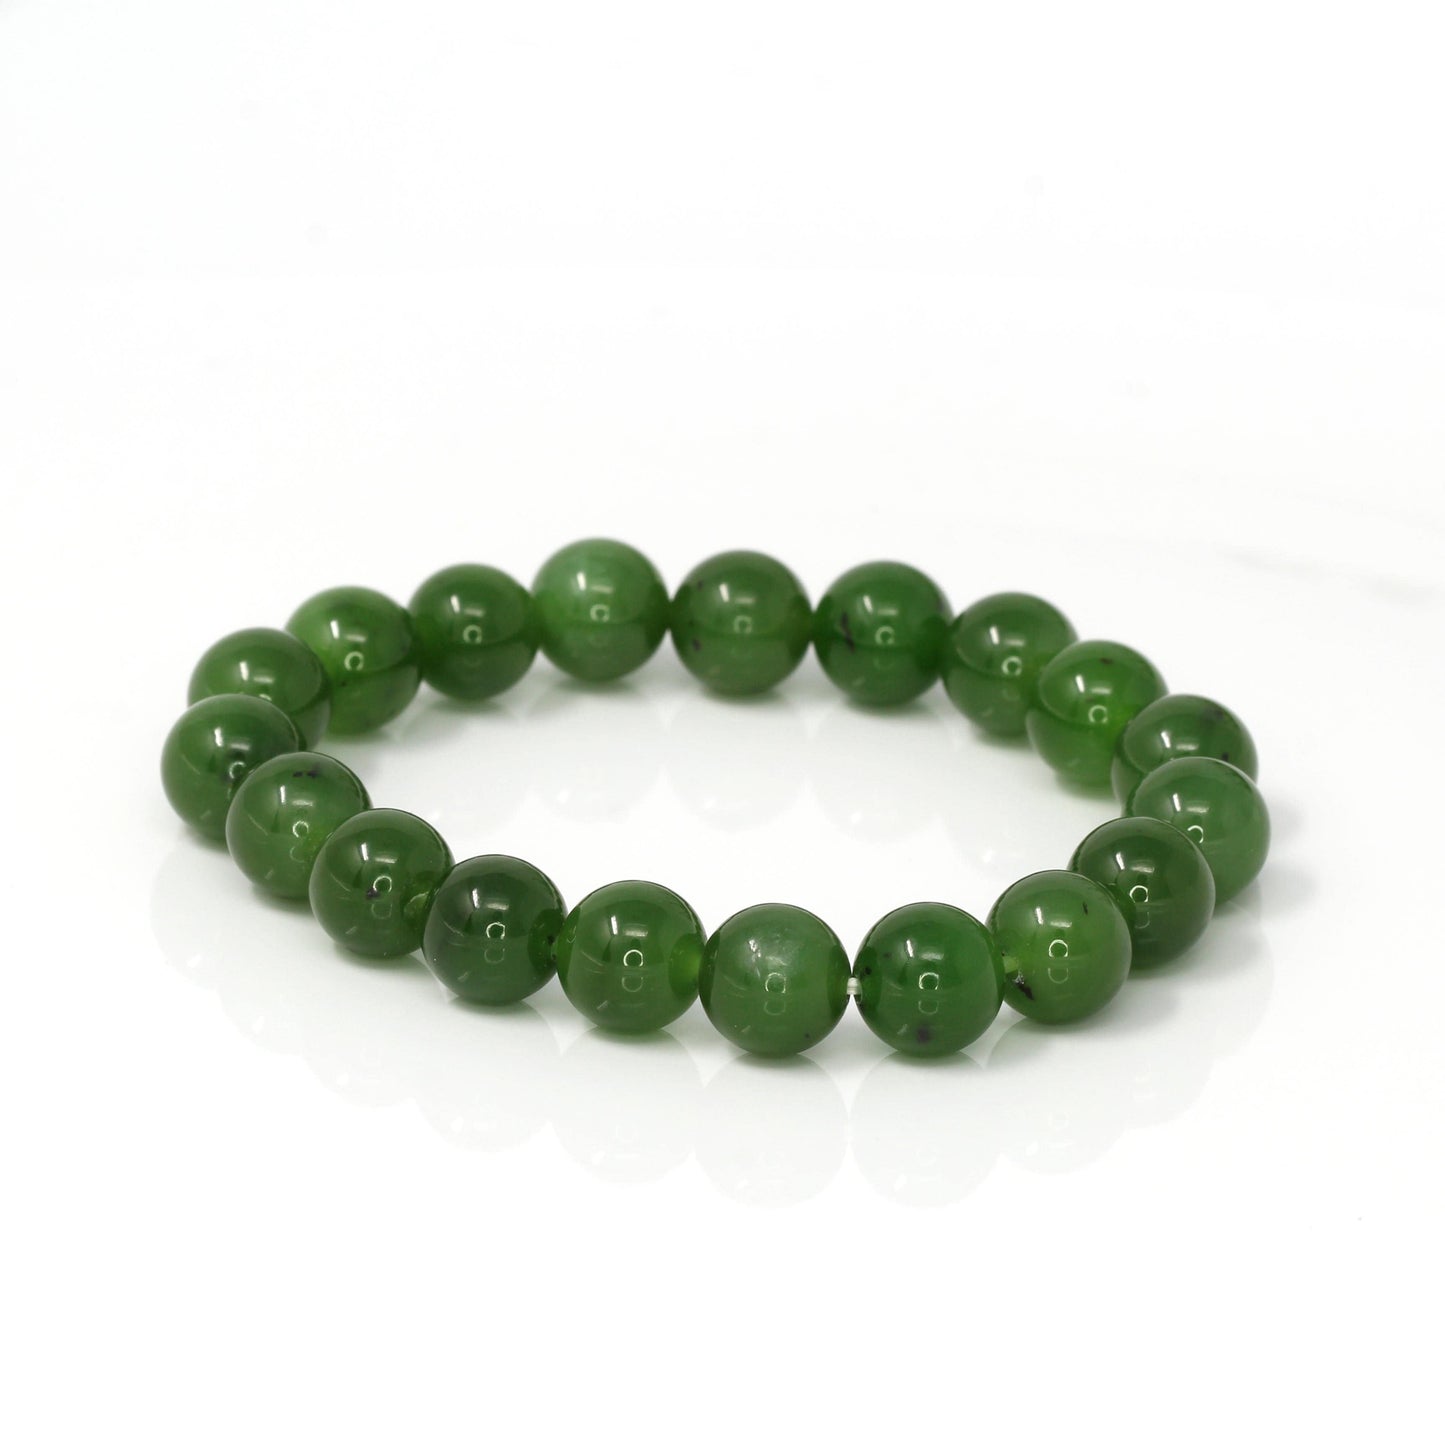 RealJade™ "Classic Bangle" Genuine Burmese High Quality Apple Green Jadeite Jade Bangle Bracelet (53.4mm) #544